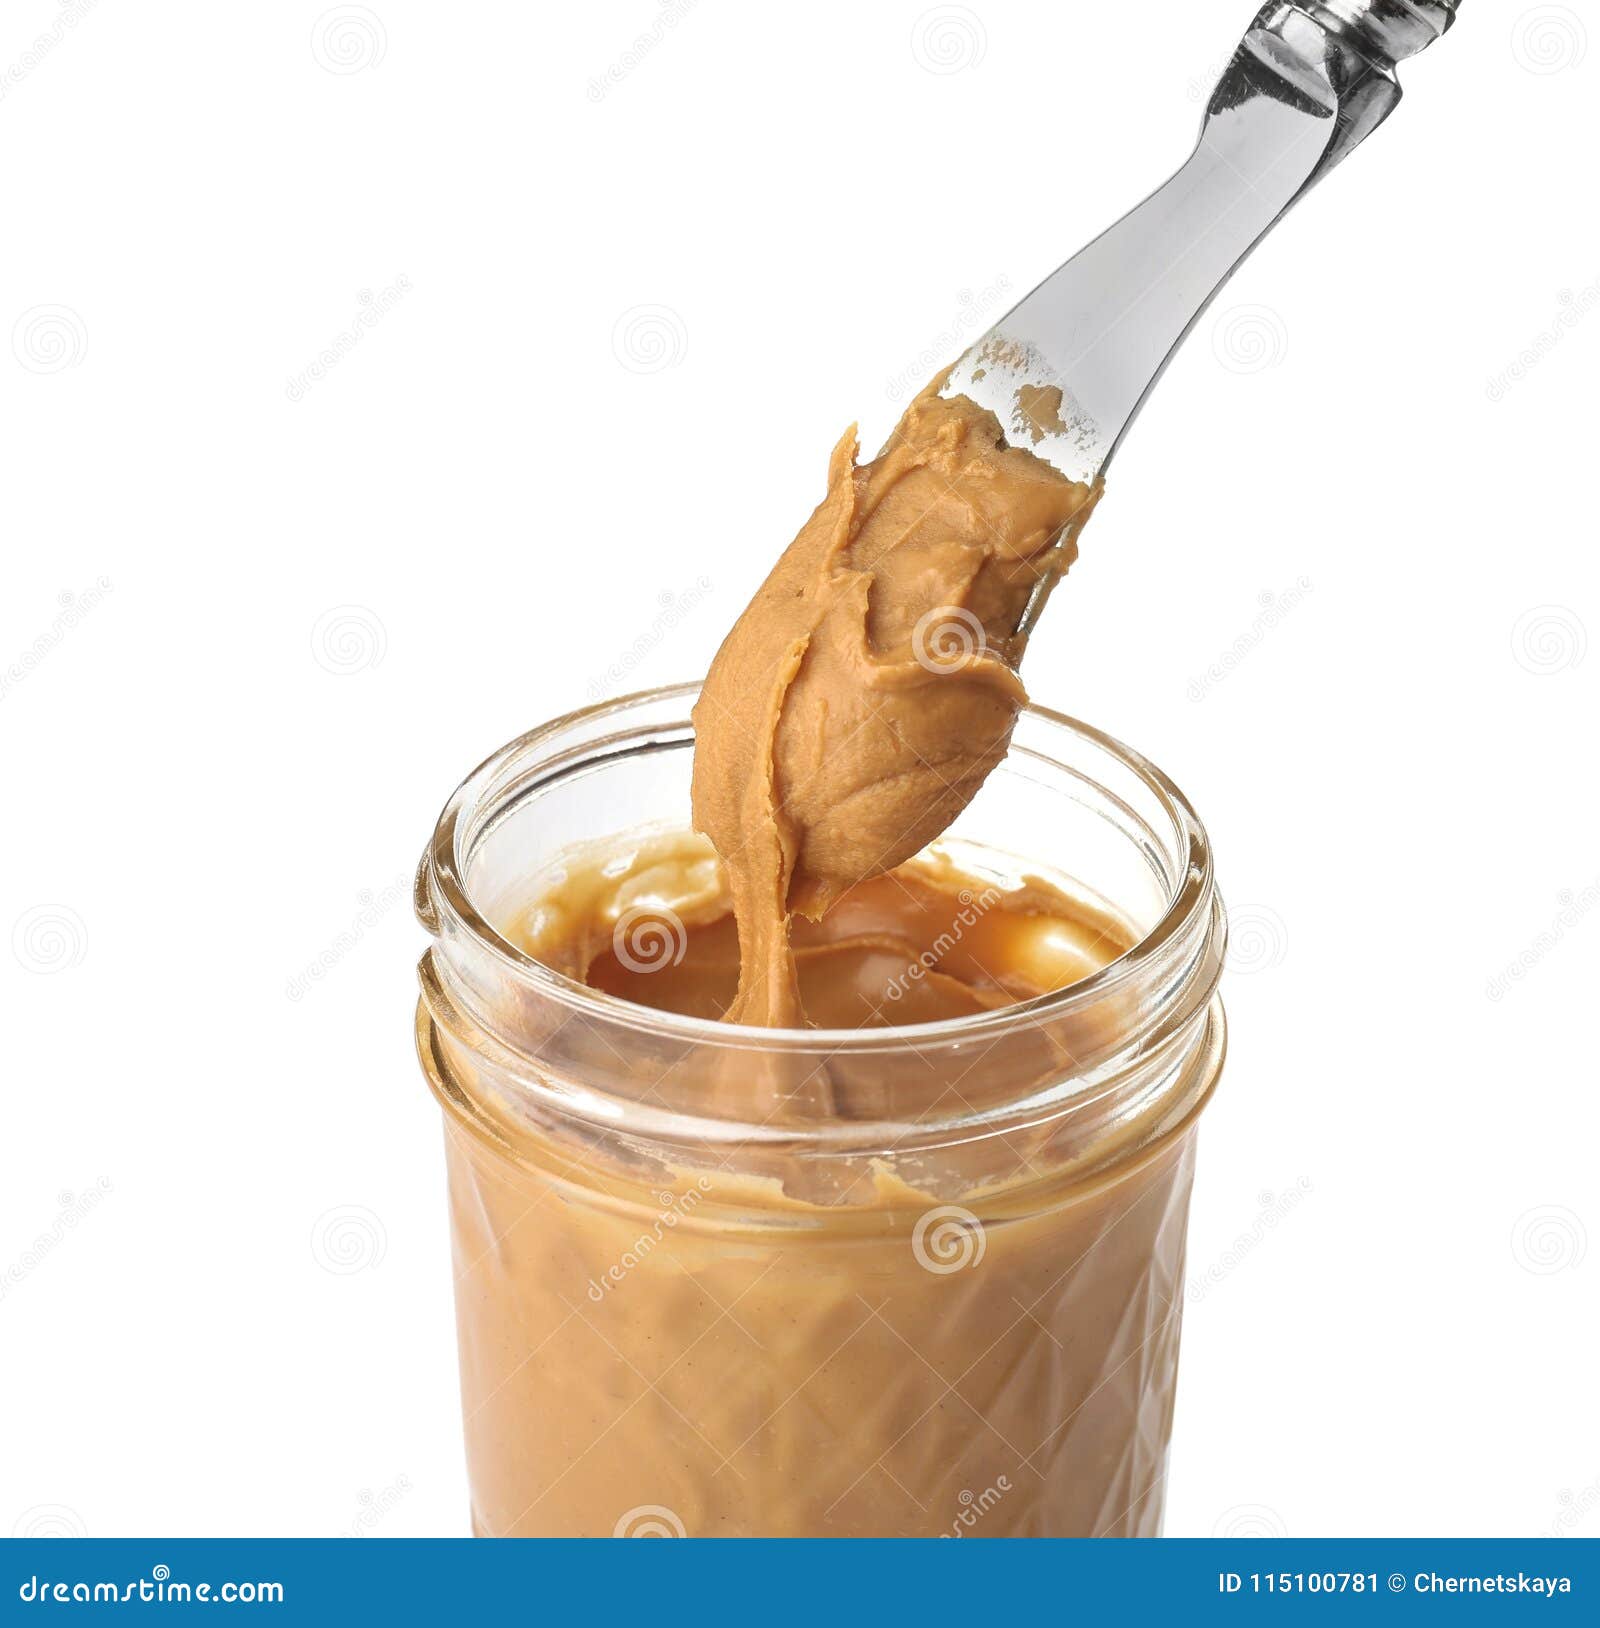 https://thumbs.dreamstime.com/z/jar-knife-creamy-peanut-butter-white-background-jar-knife-creamy-peanut-butter-115100781.jpg